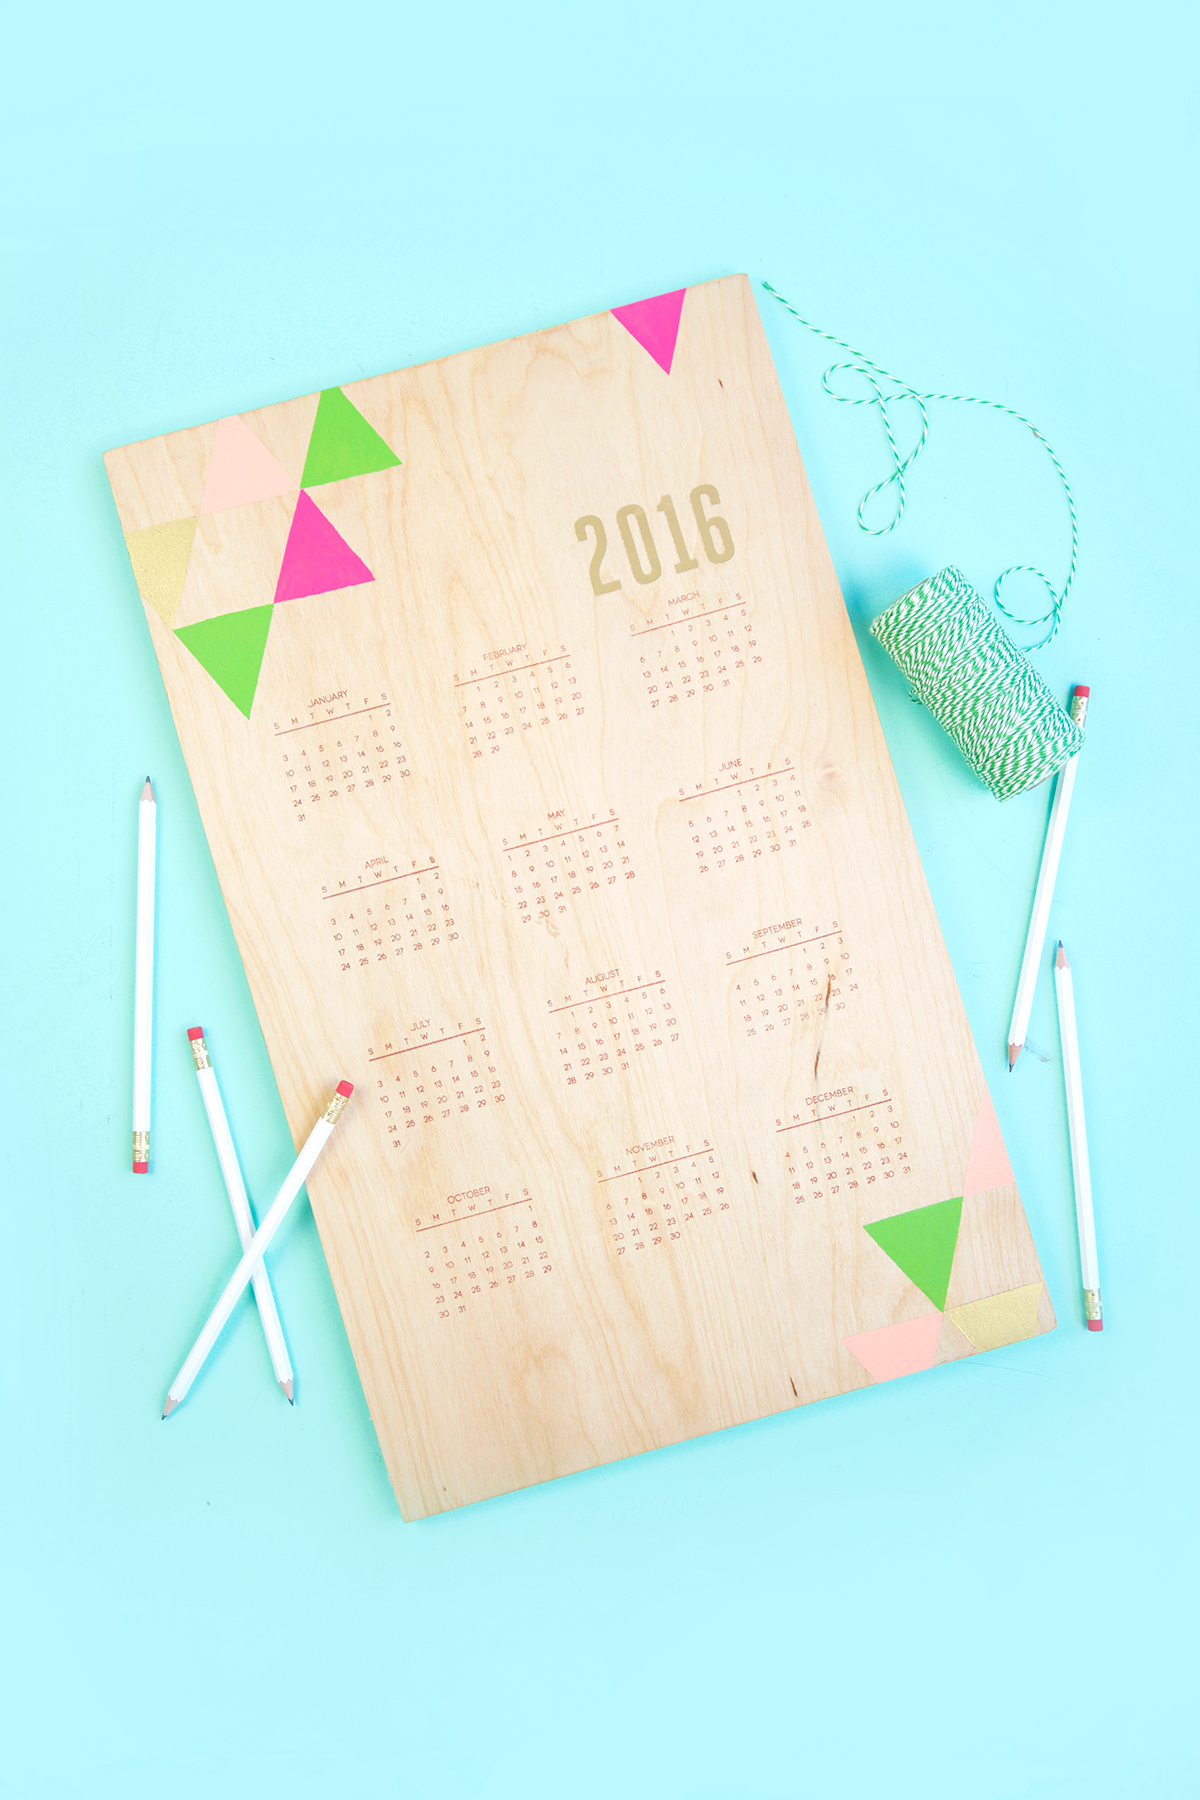 25 handstamped wooden calendar